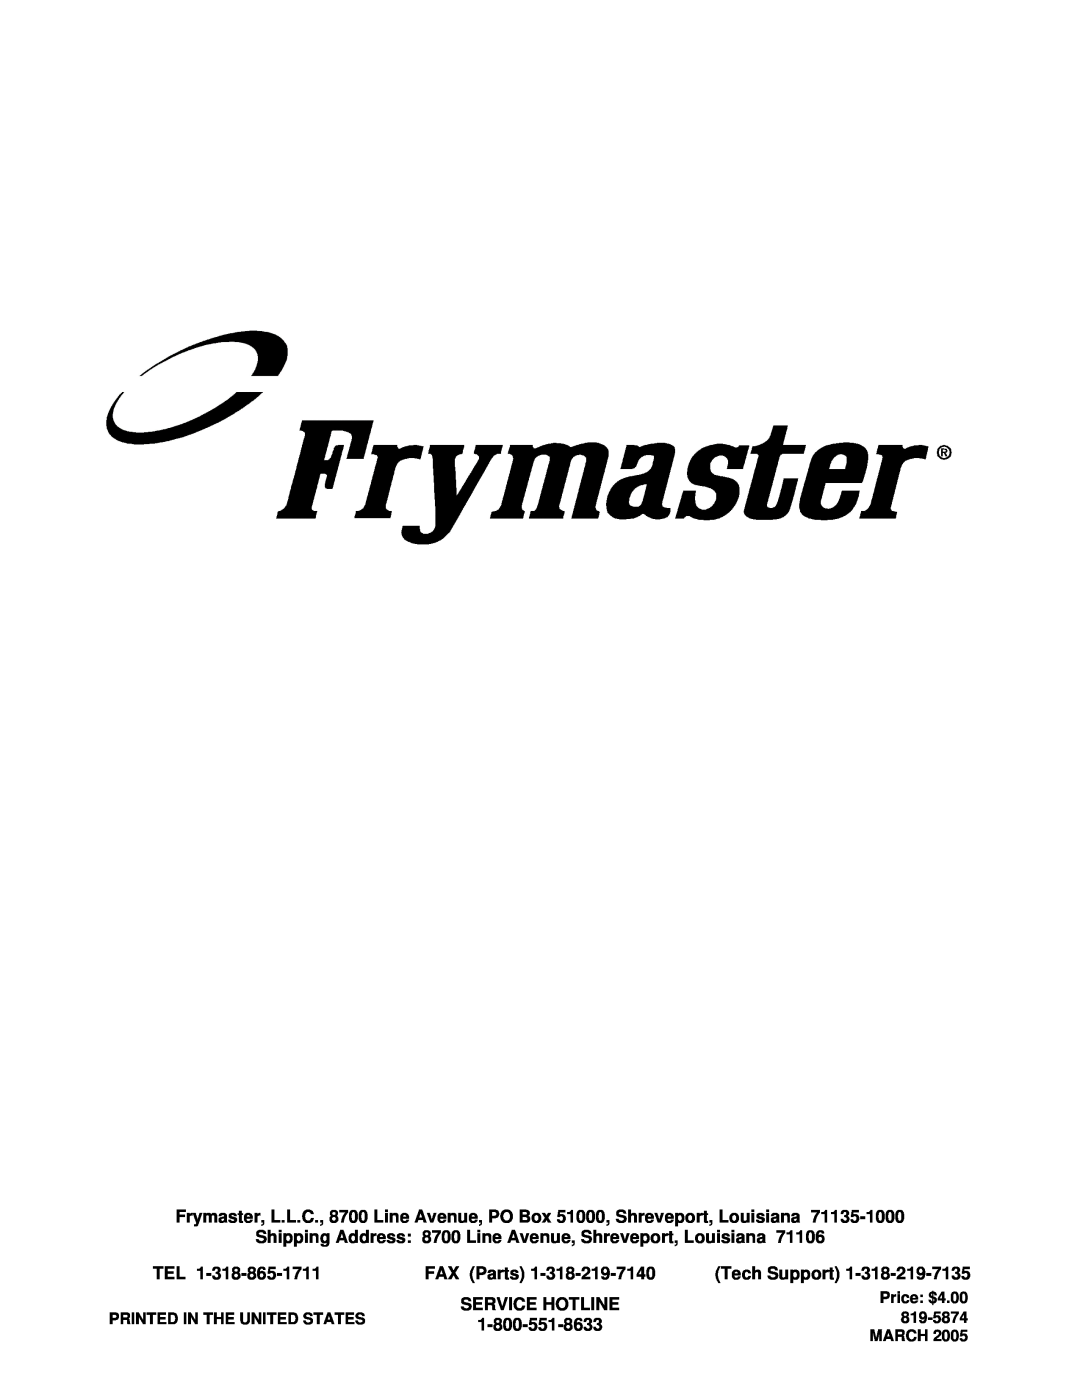 Frymaster II Shipping Address 8700 Line Avenue, Shreveport, Louisiana, FAX Parts, Tech Support, Service Hotline, 819-5874 